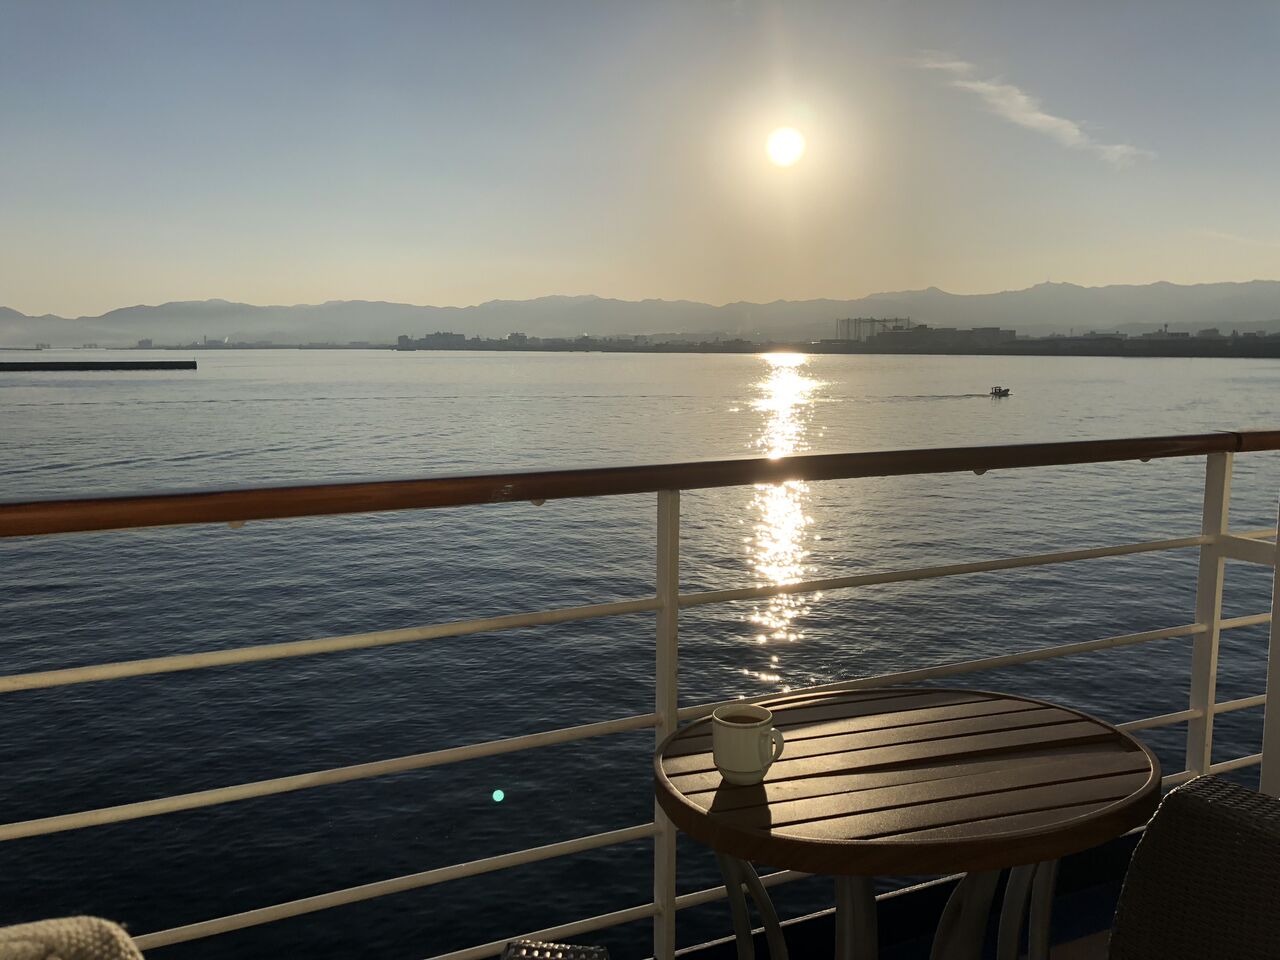 Regent Seven seas cruise review